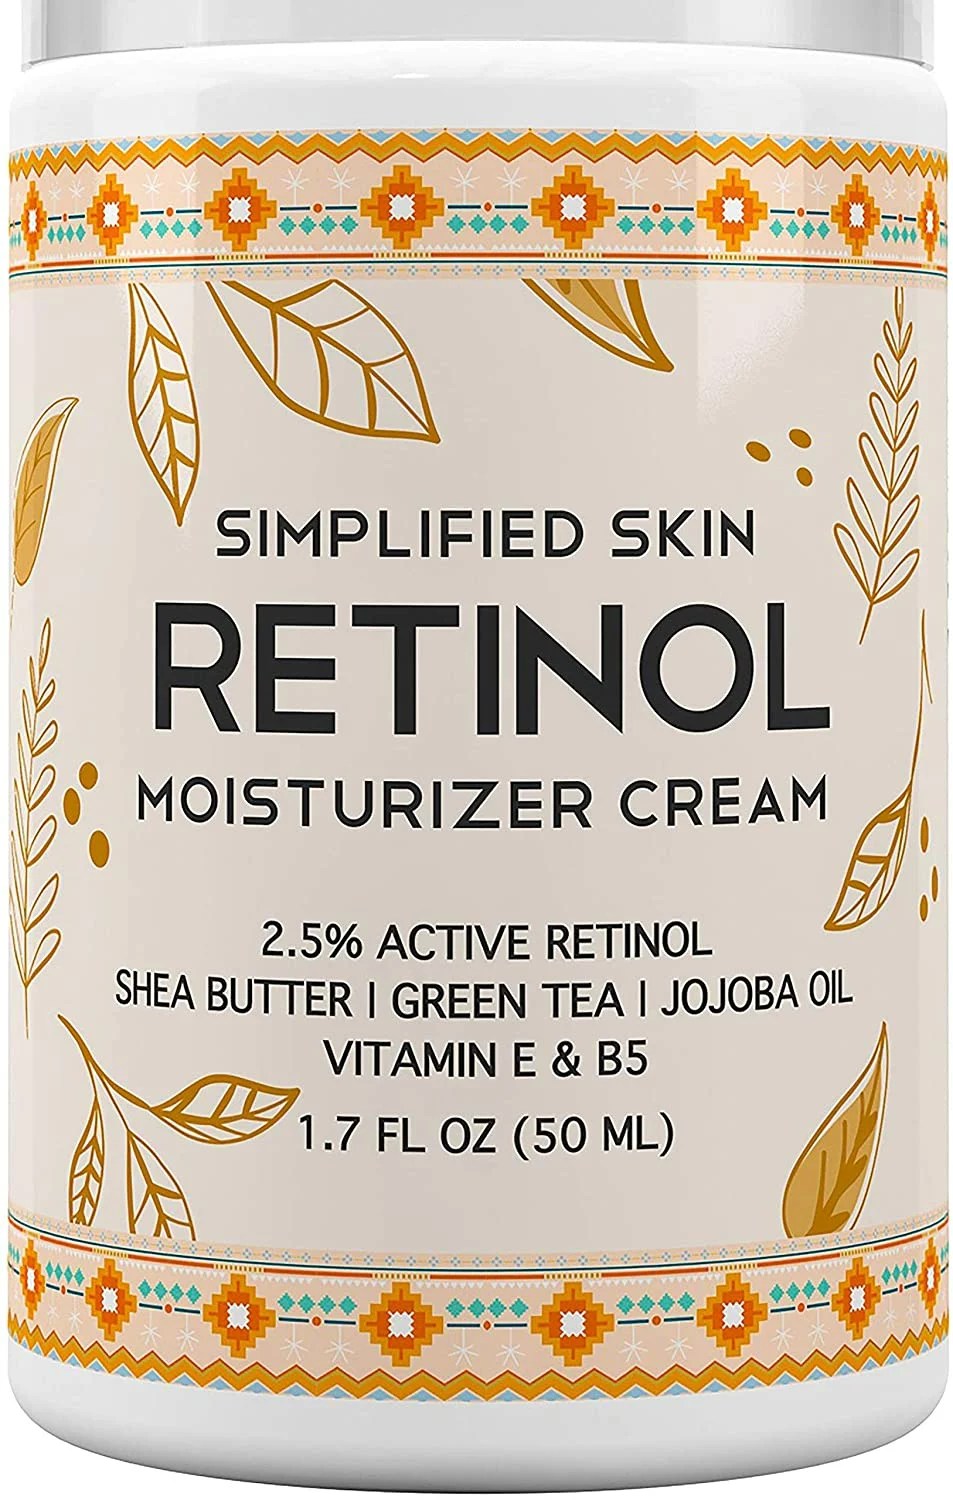 A bottle of Simplified Skin Retinol Moisturizing Cream.